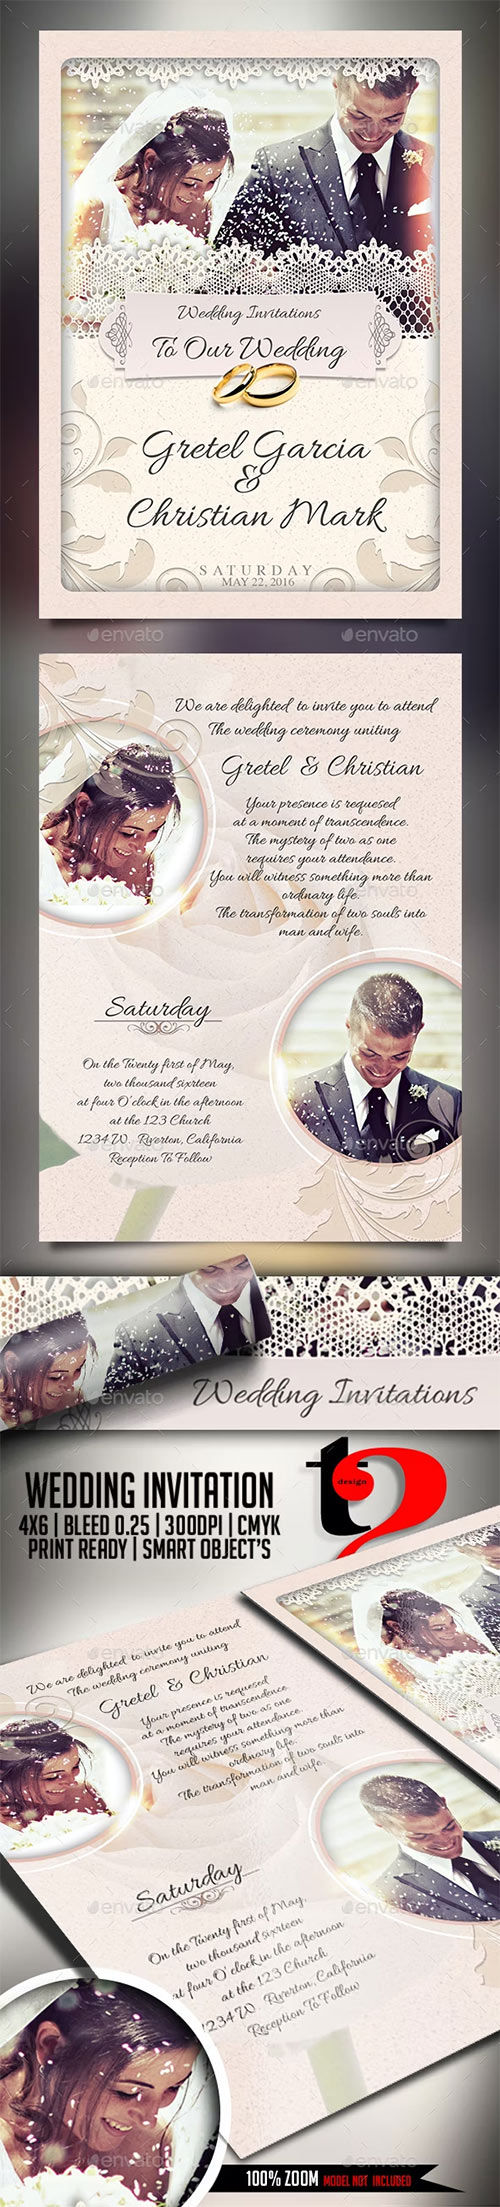 The Wedding Invitation 14437640